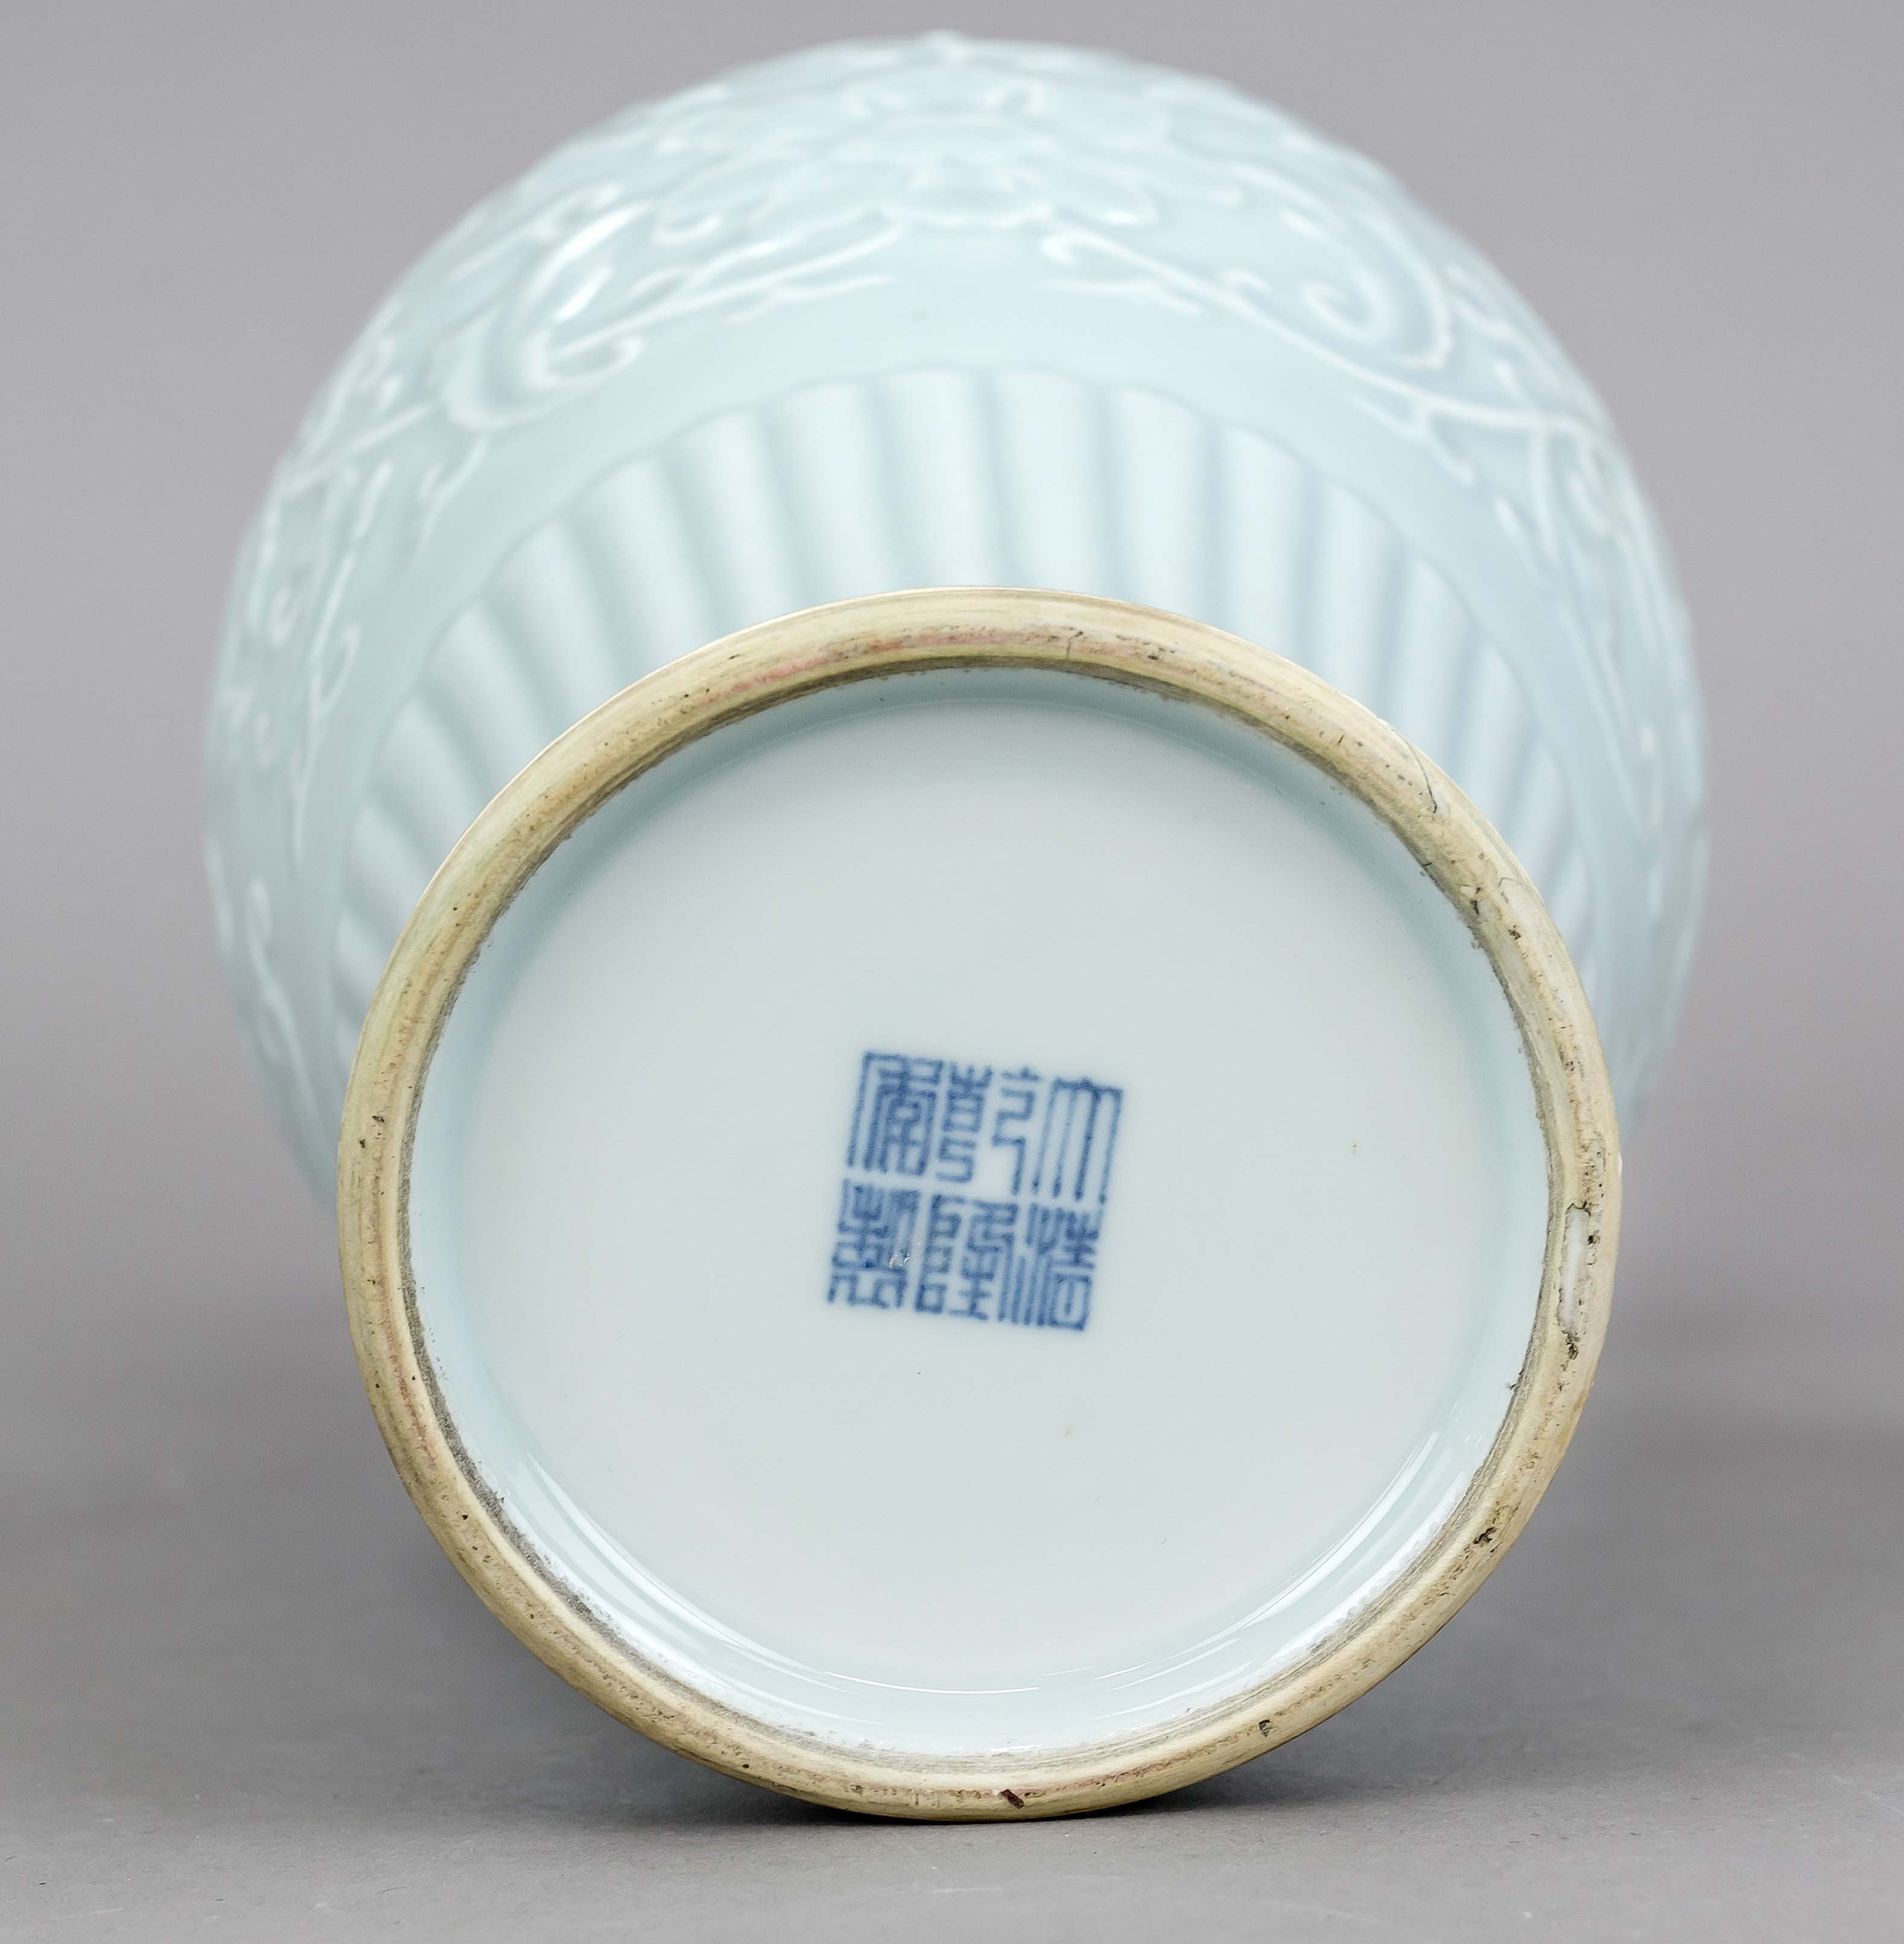 Monochrome vase, China, 20th century, baluster shape with tubular handles, molded relief decoration, - Image 2 of 2